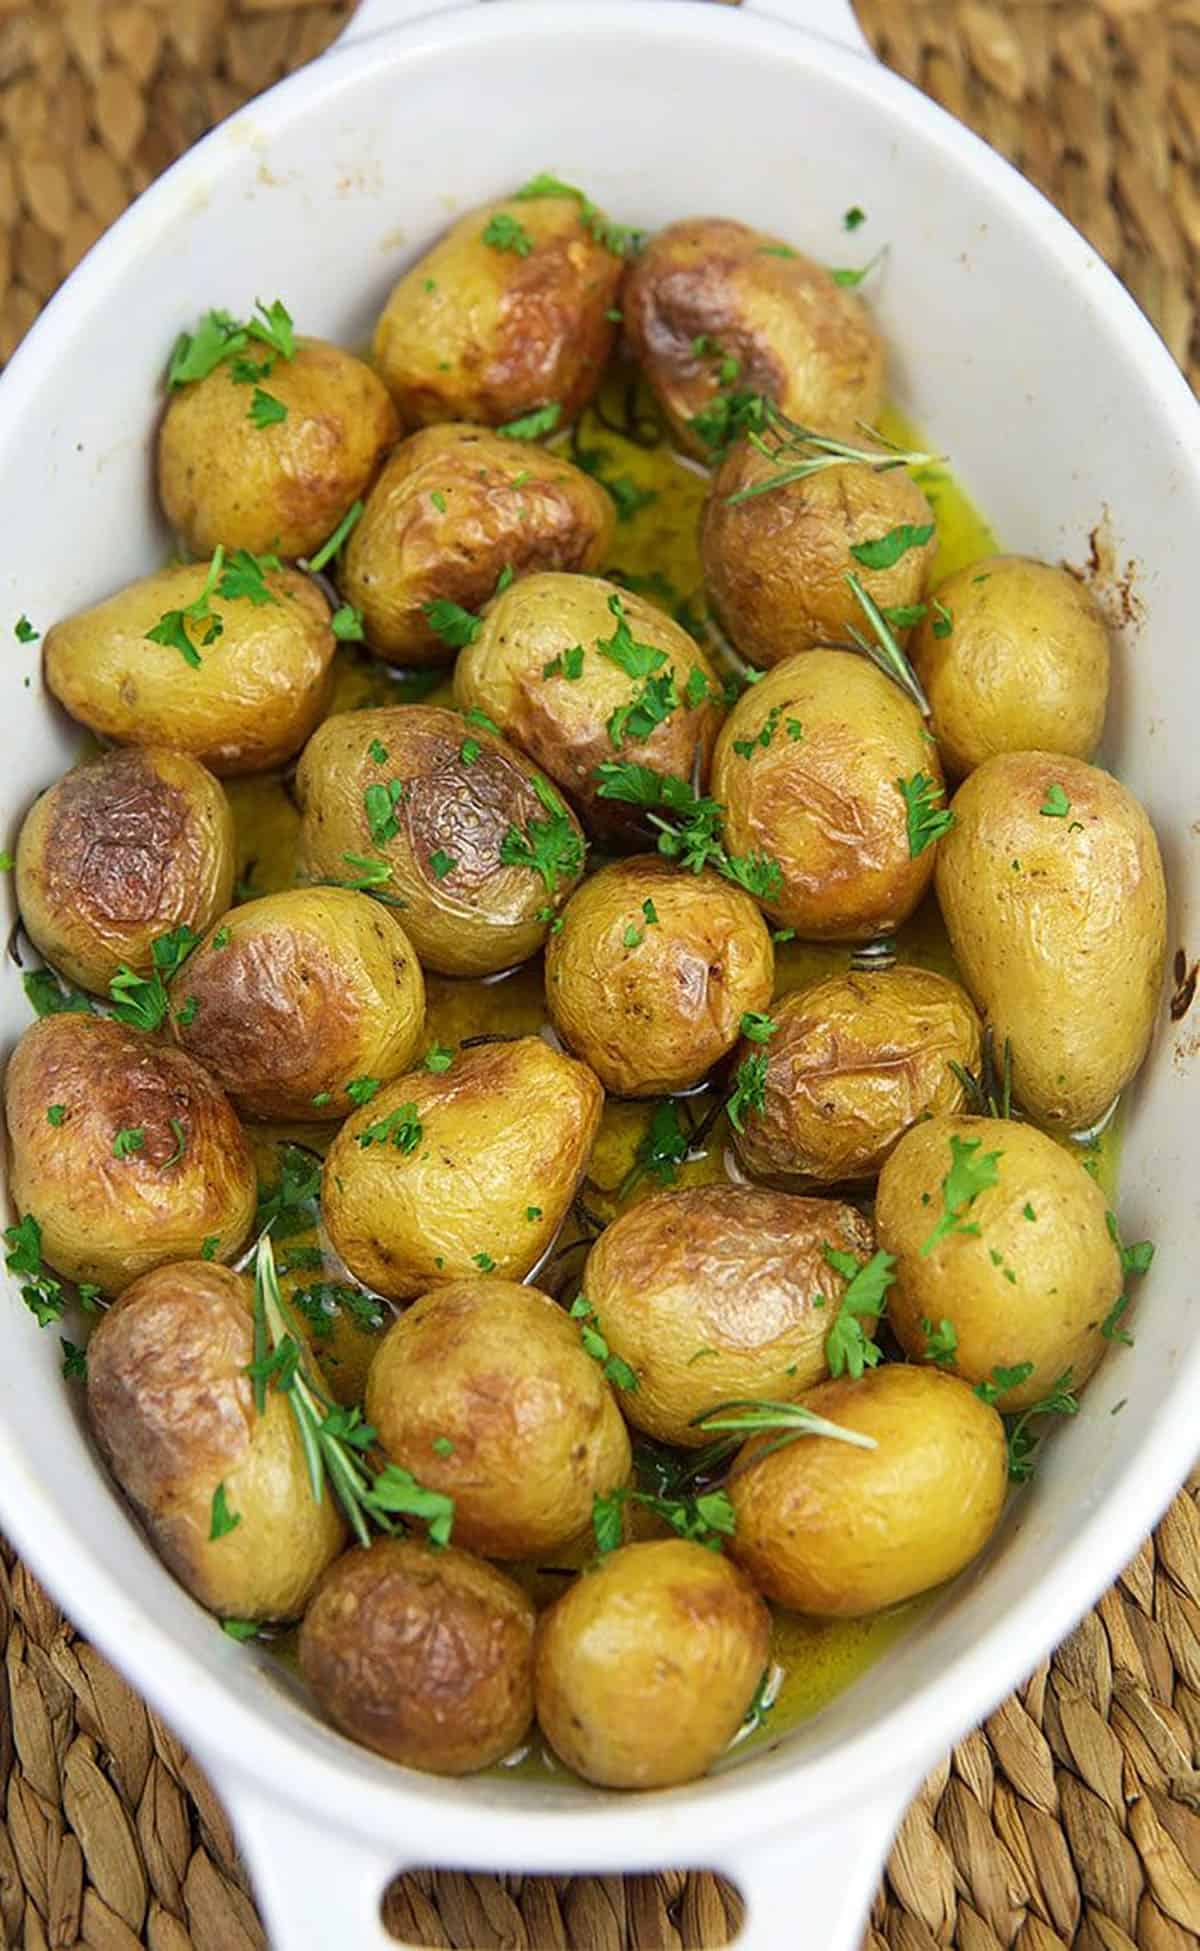 https://thesuburbansoapbox.com/wp-content/uploads/2021/12/Roast-Potatoes-4.jpg